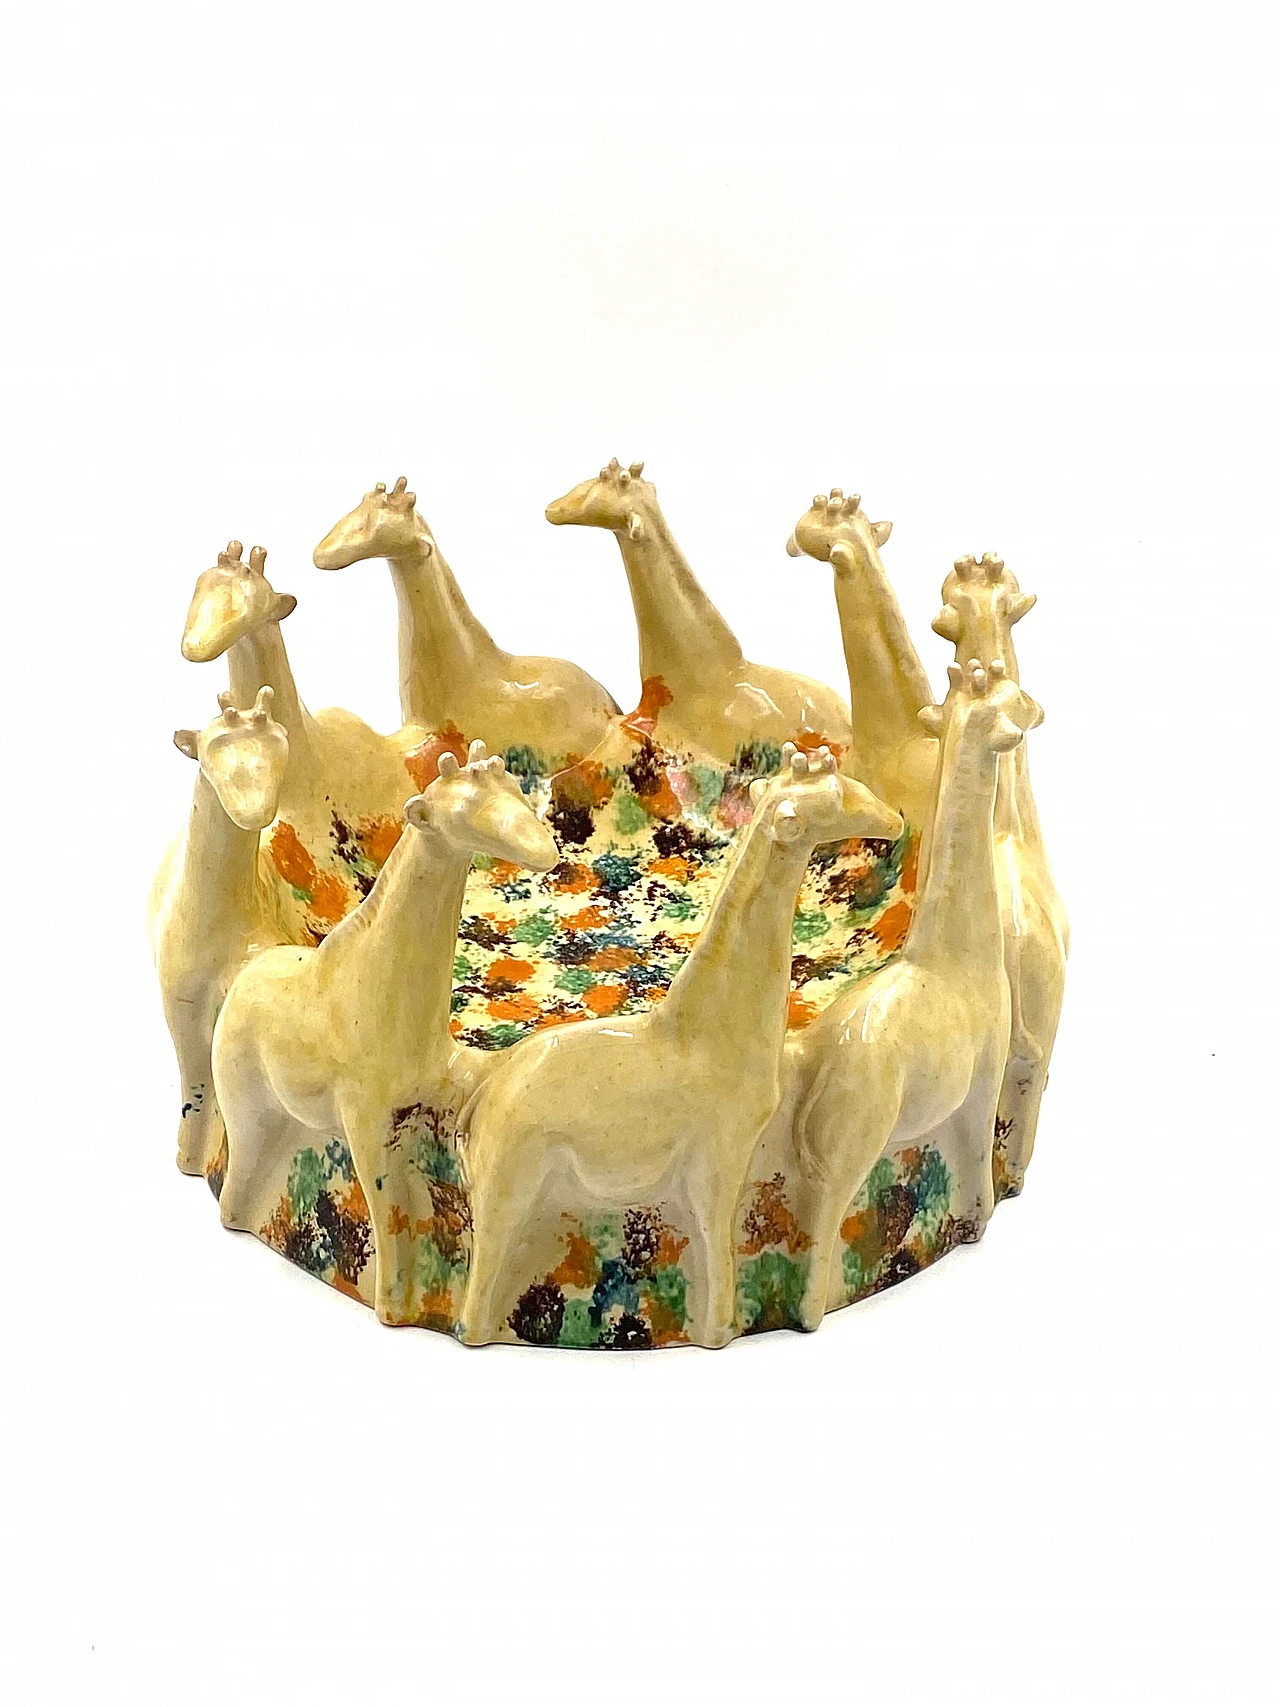 Ceramic centerpiece by ND Dolfi Ceramiche d'Arte, 1990s 17